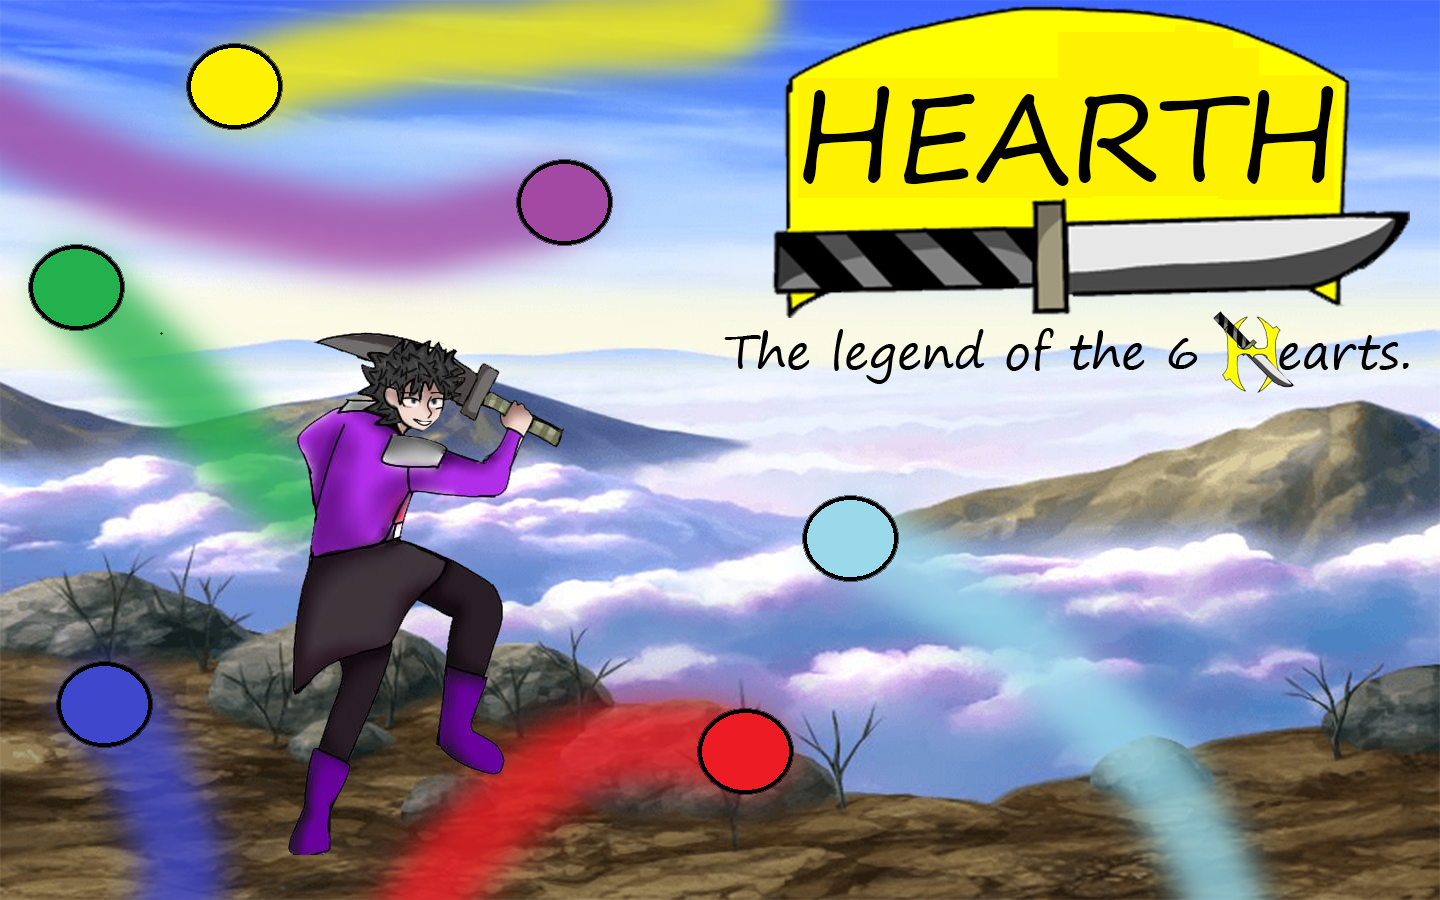 Hearth: The legend of the 6 hearts PC beta V4.02